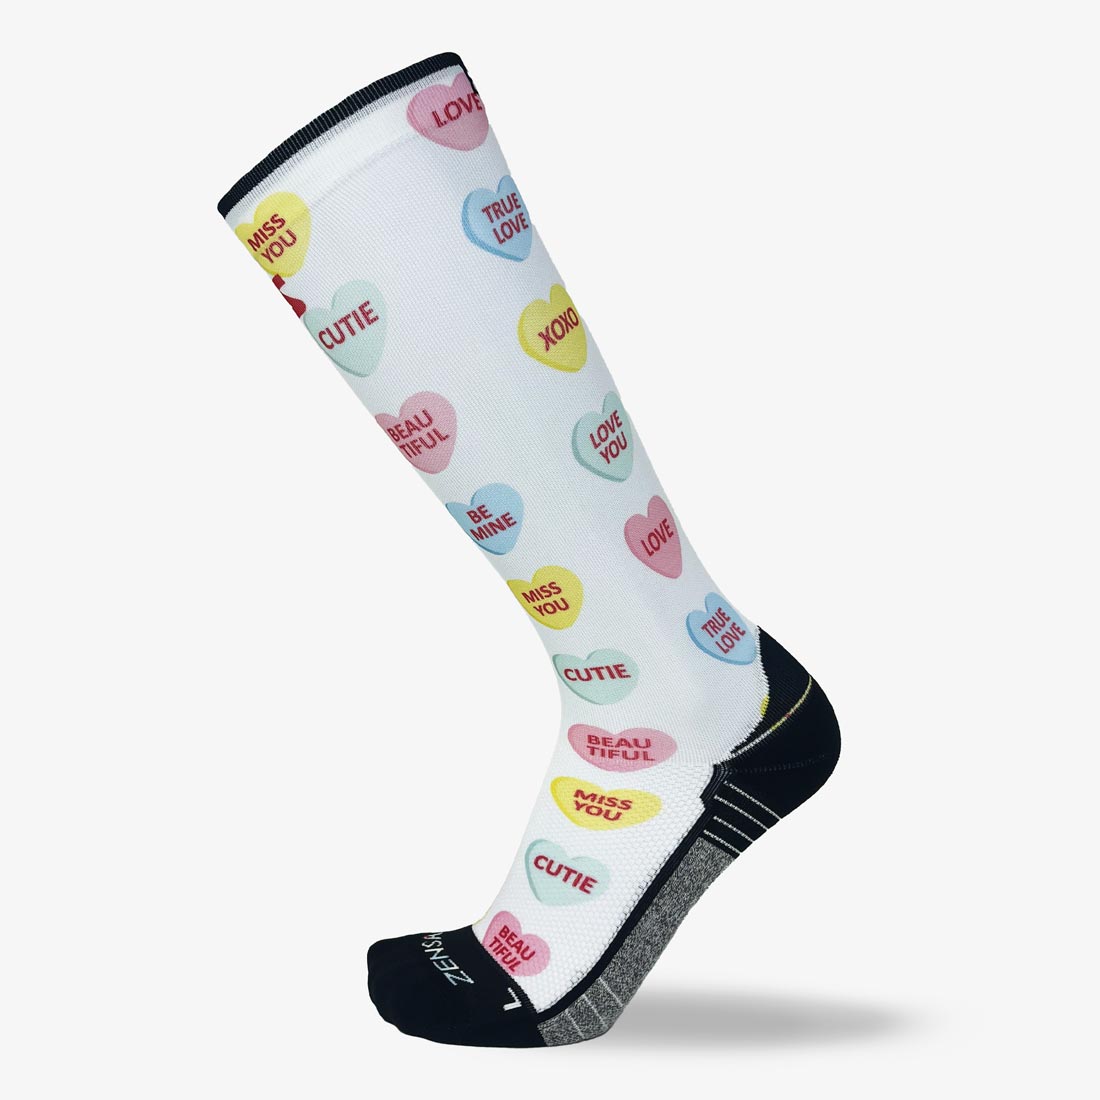 Candy Hearts Compression Socks (Knee-High)Socks - Zensah